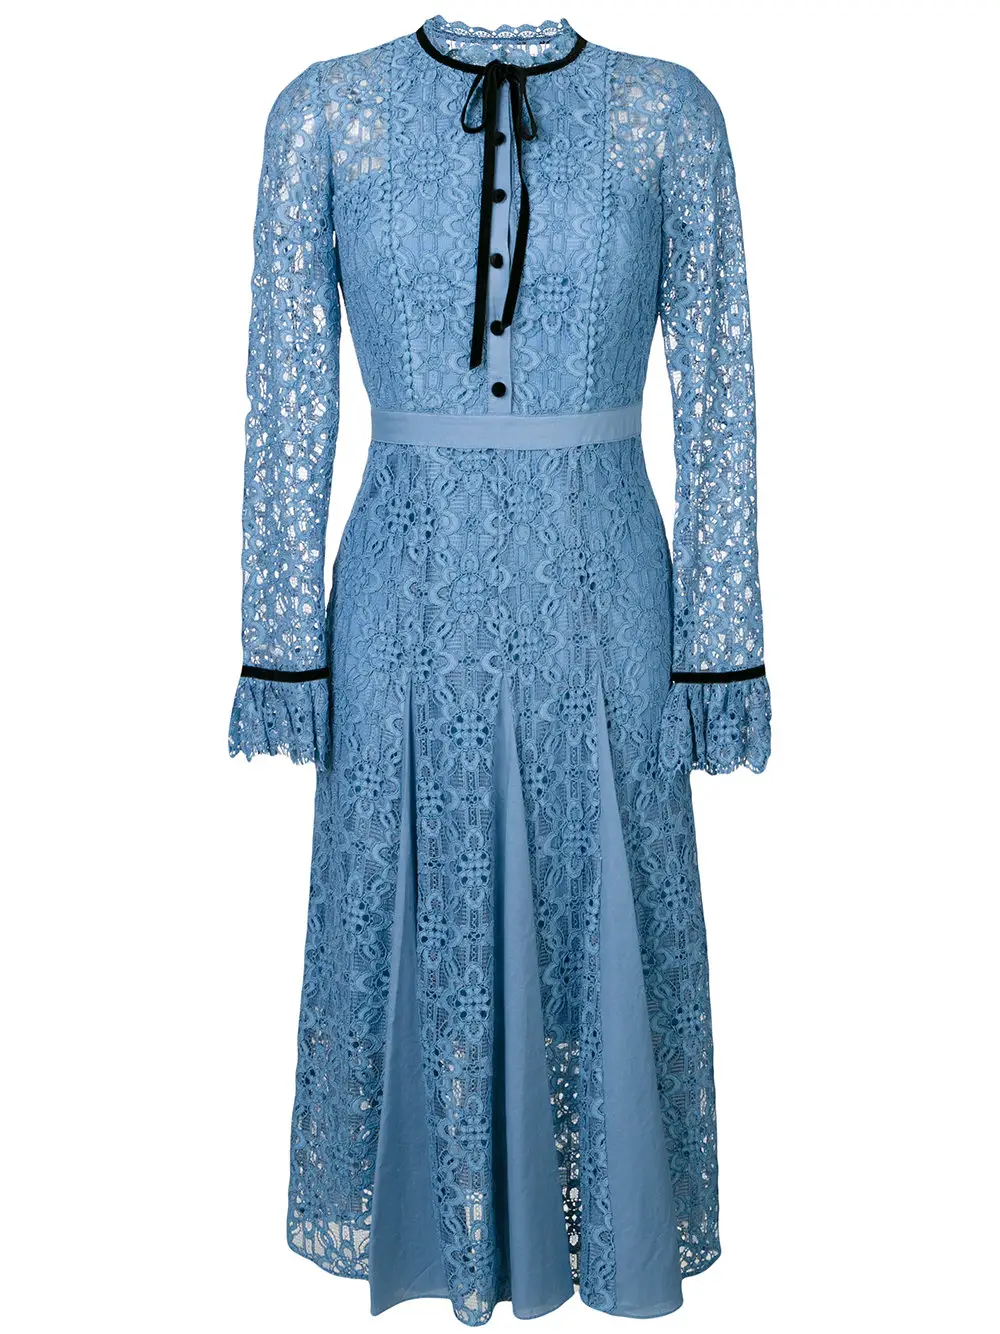 Duchess of Cambridge emperley London’s ‘Eclipse’ Lace Dress